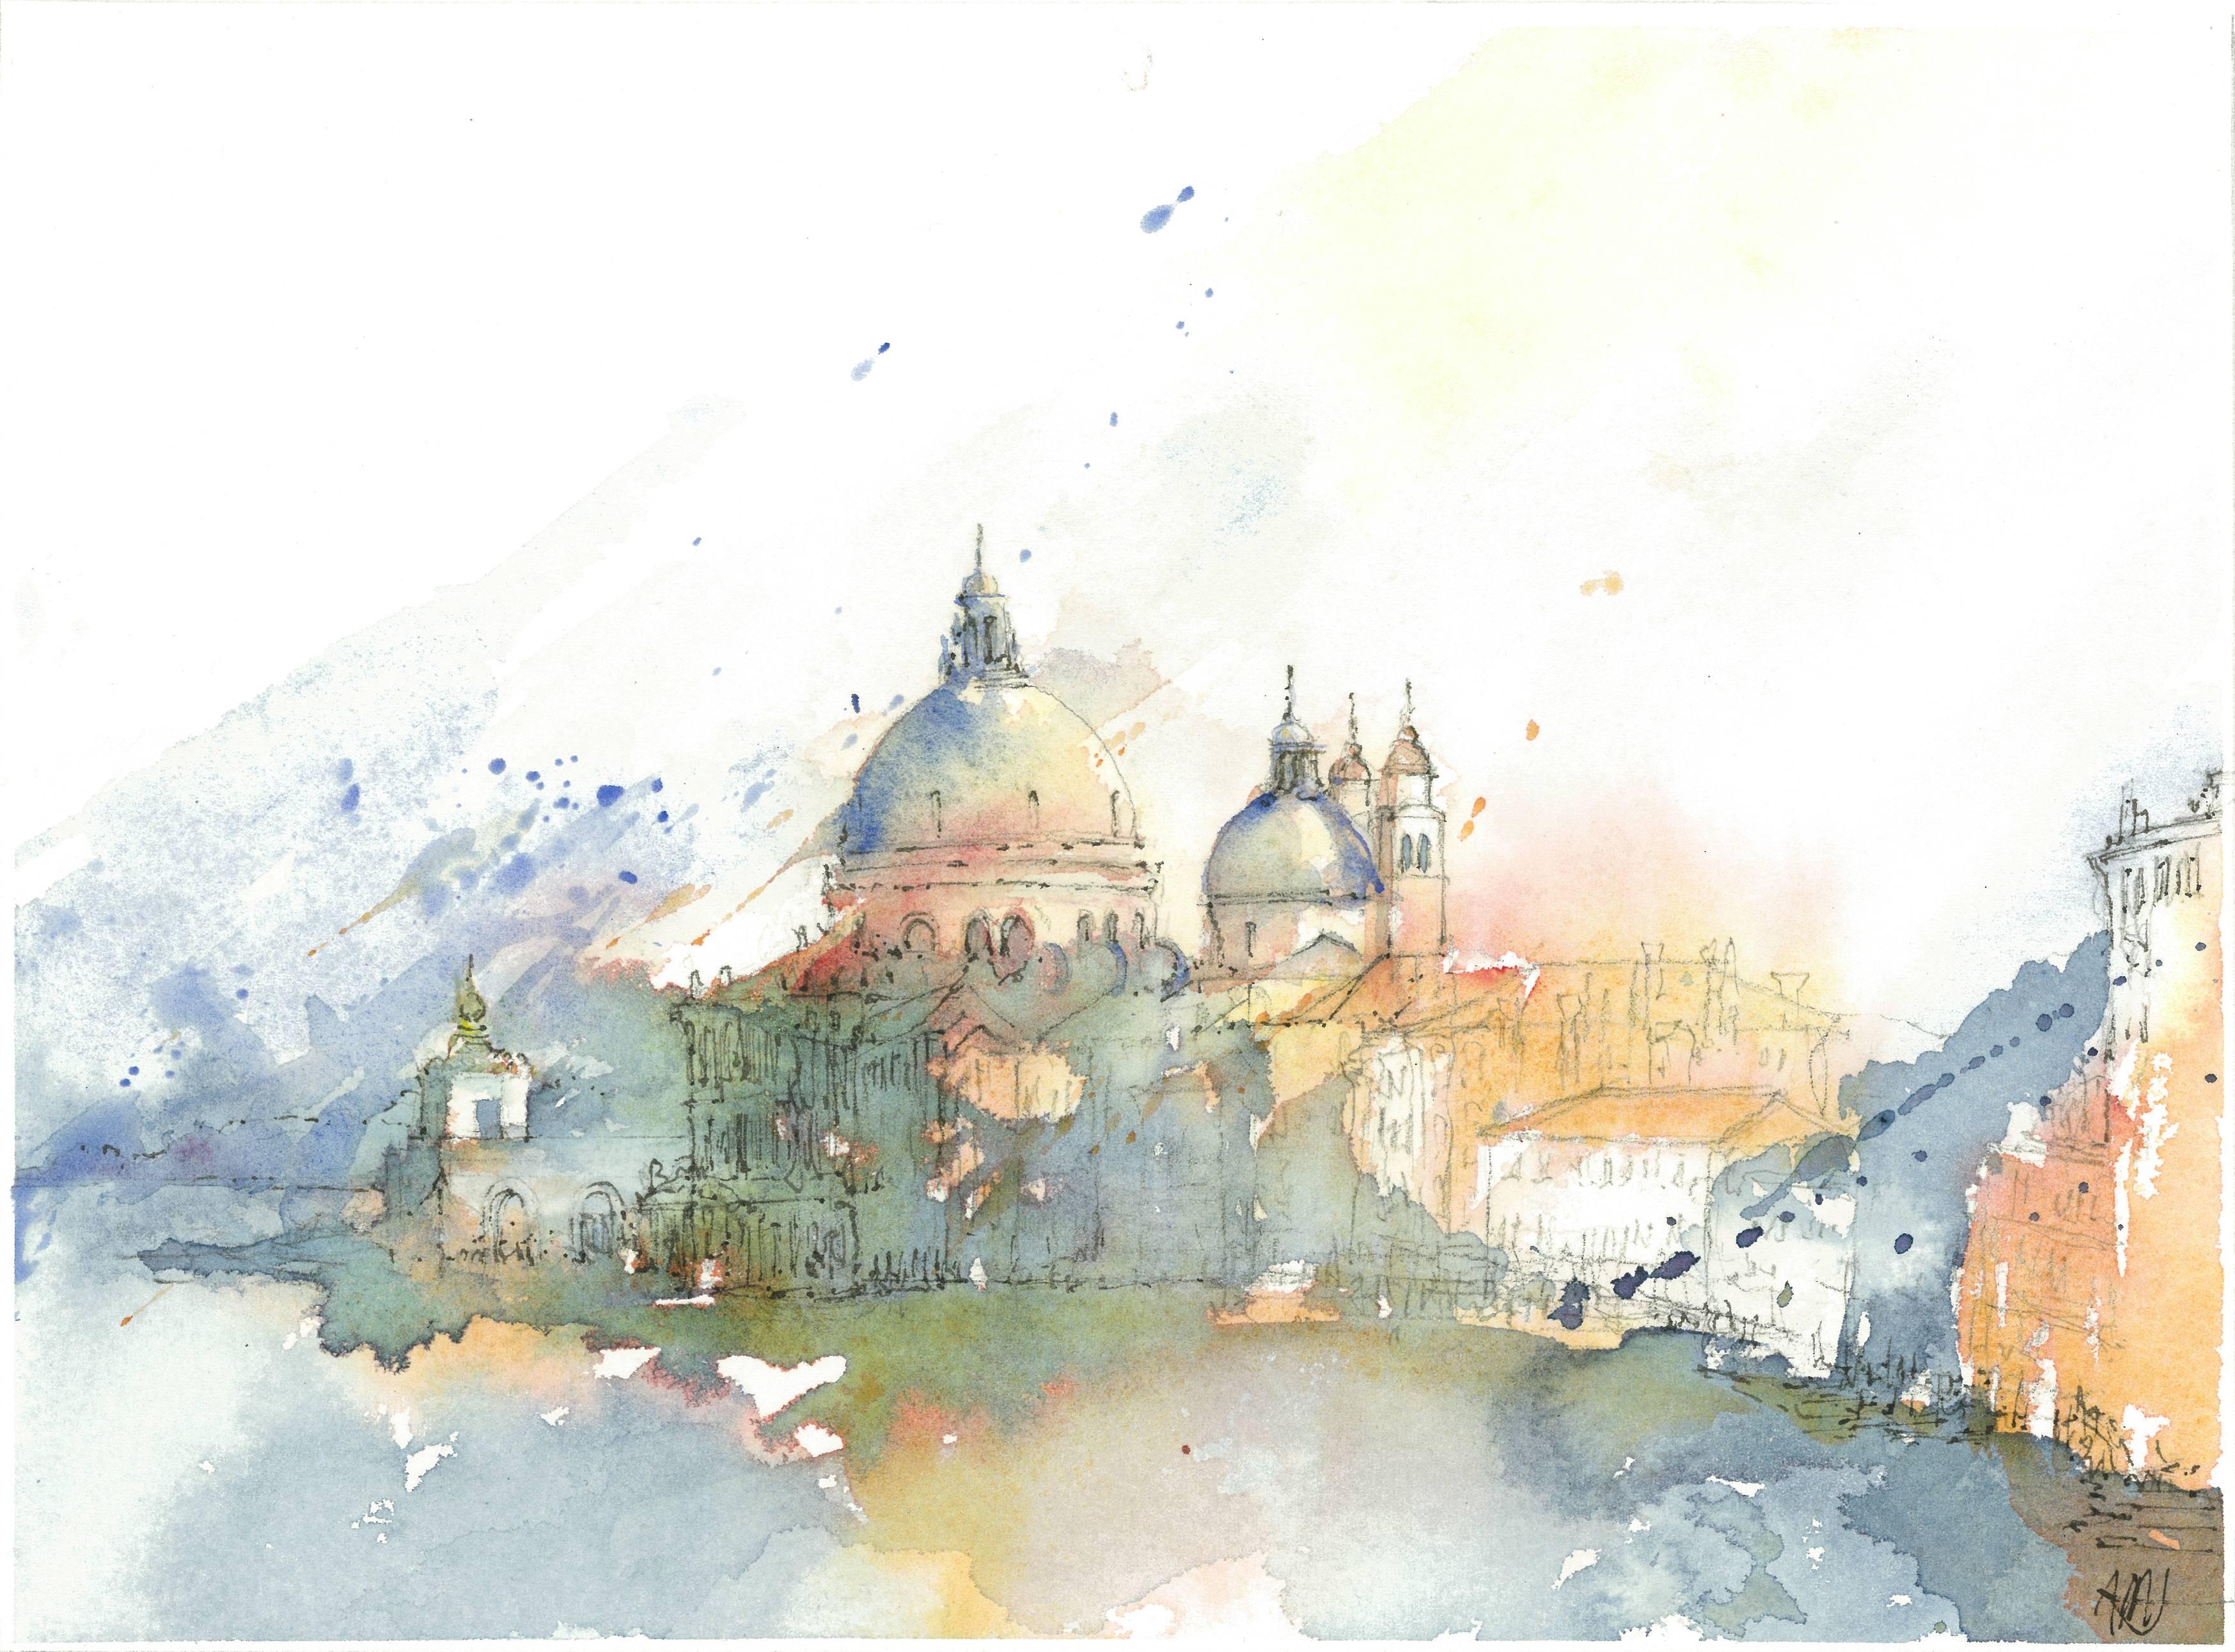 Landscape Art Mclean Jenkins - « Santa Maria della Salute I » - Venise - Peinture à l'aquarelle - Turner